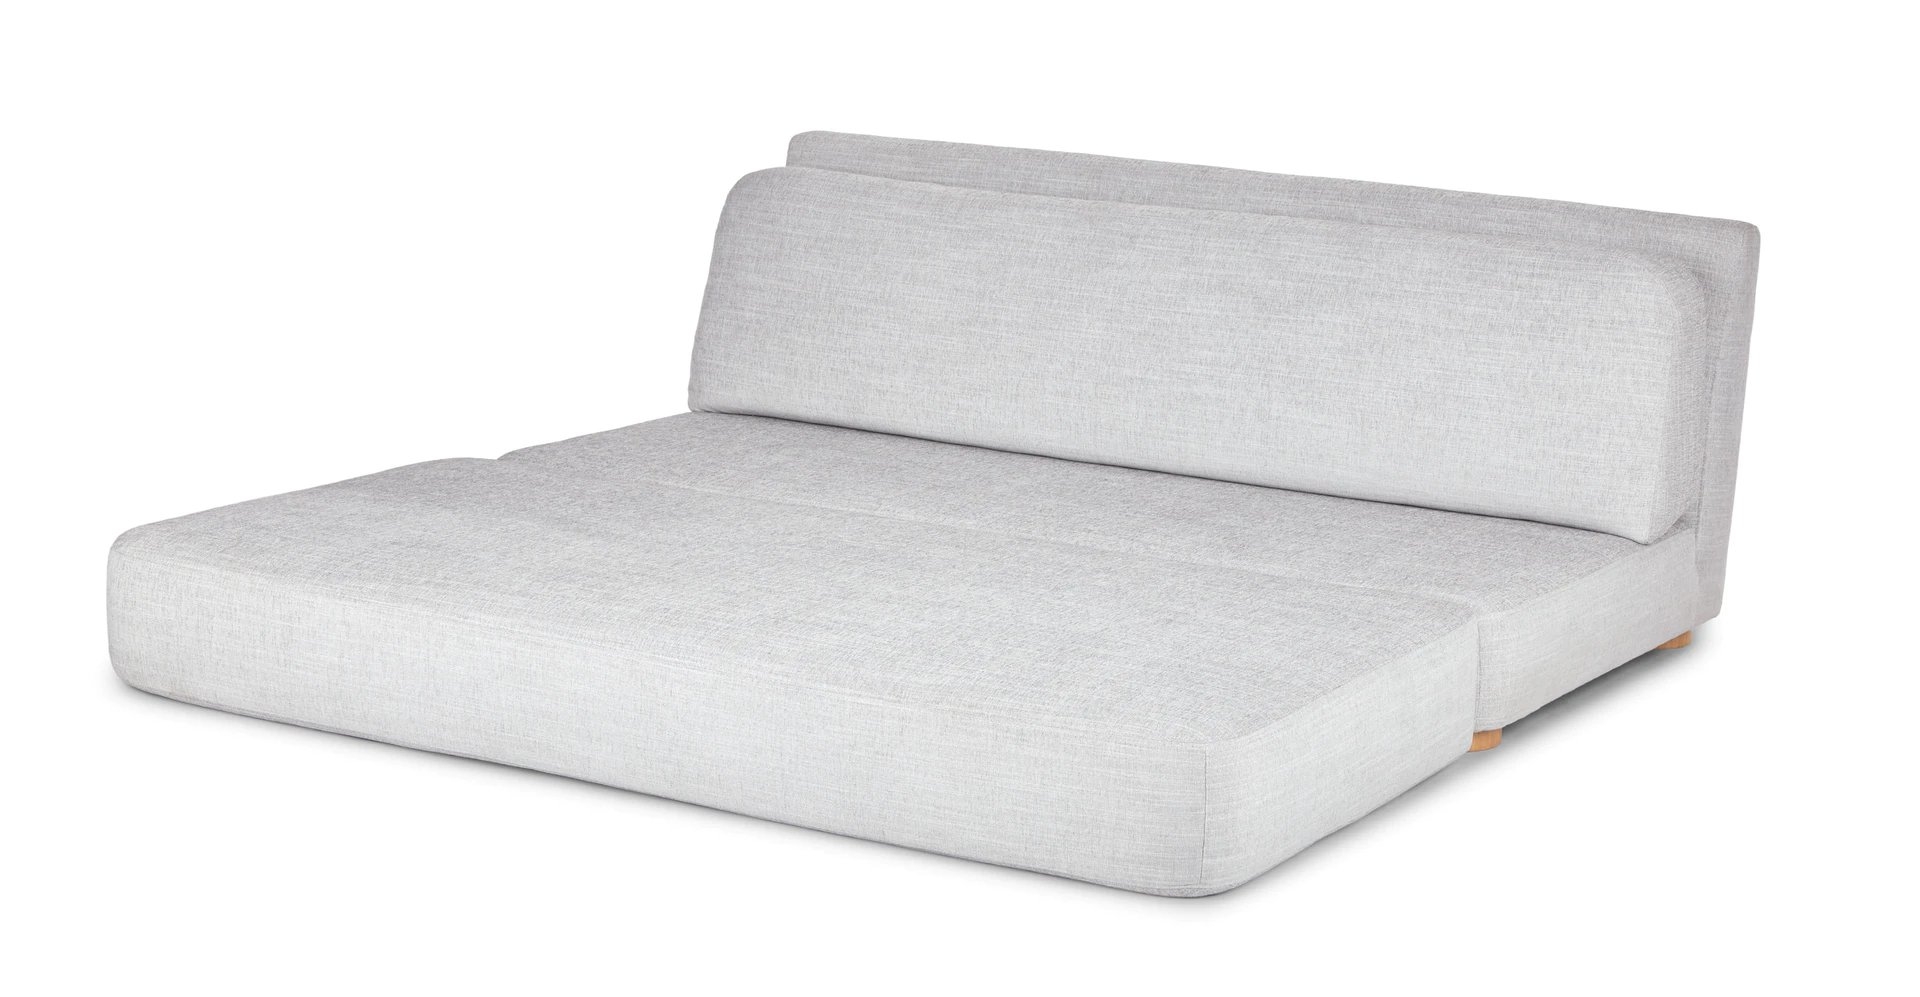 Simplis Froth Gray Sofa - Image 3